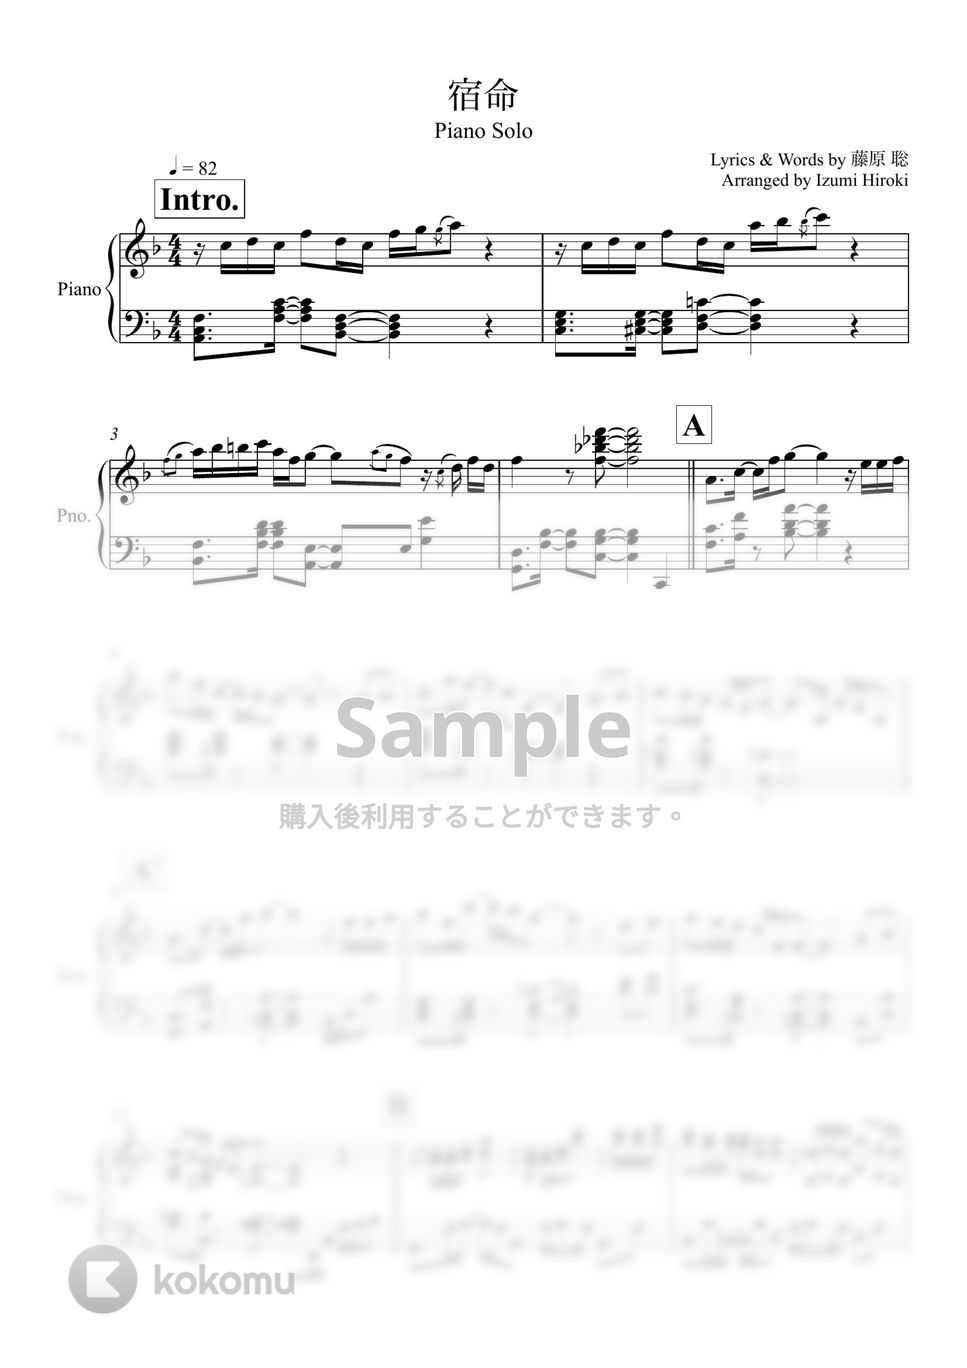 Official髭男dism - 宿命 (ピアノソロ) by 泉宏樹